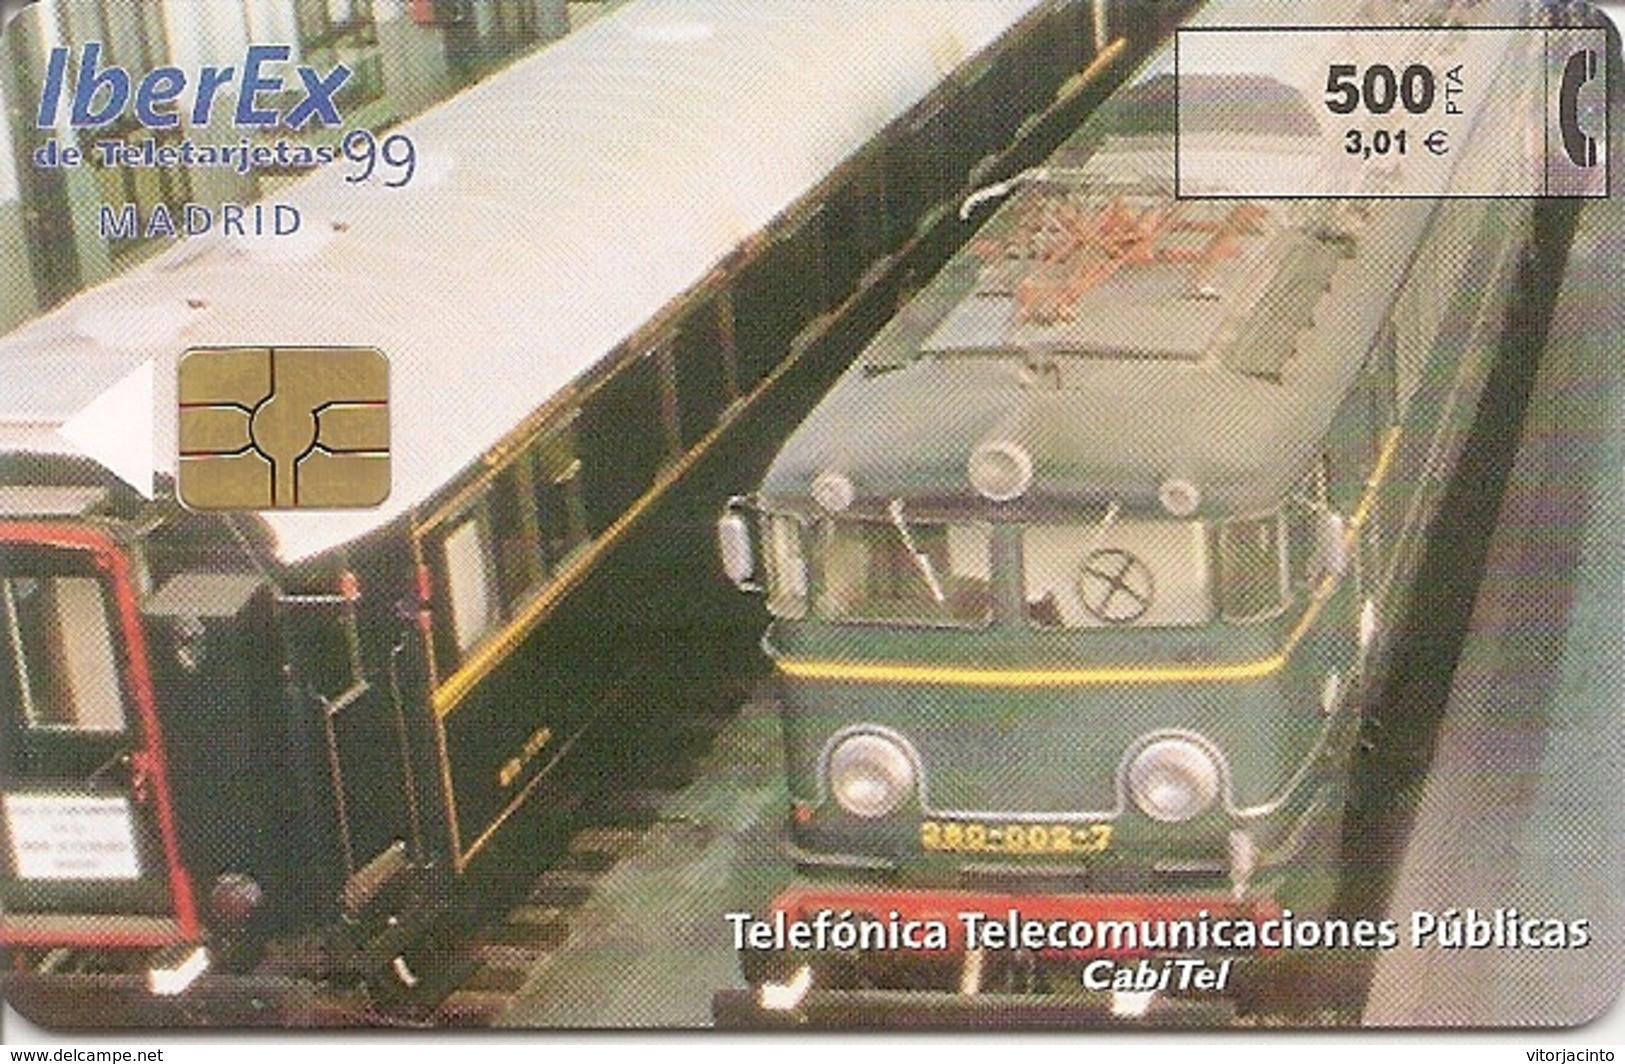 Telefónica - IBEREX 88 - Madrid - Commemorative Advertisment